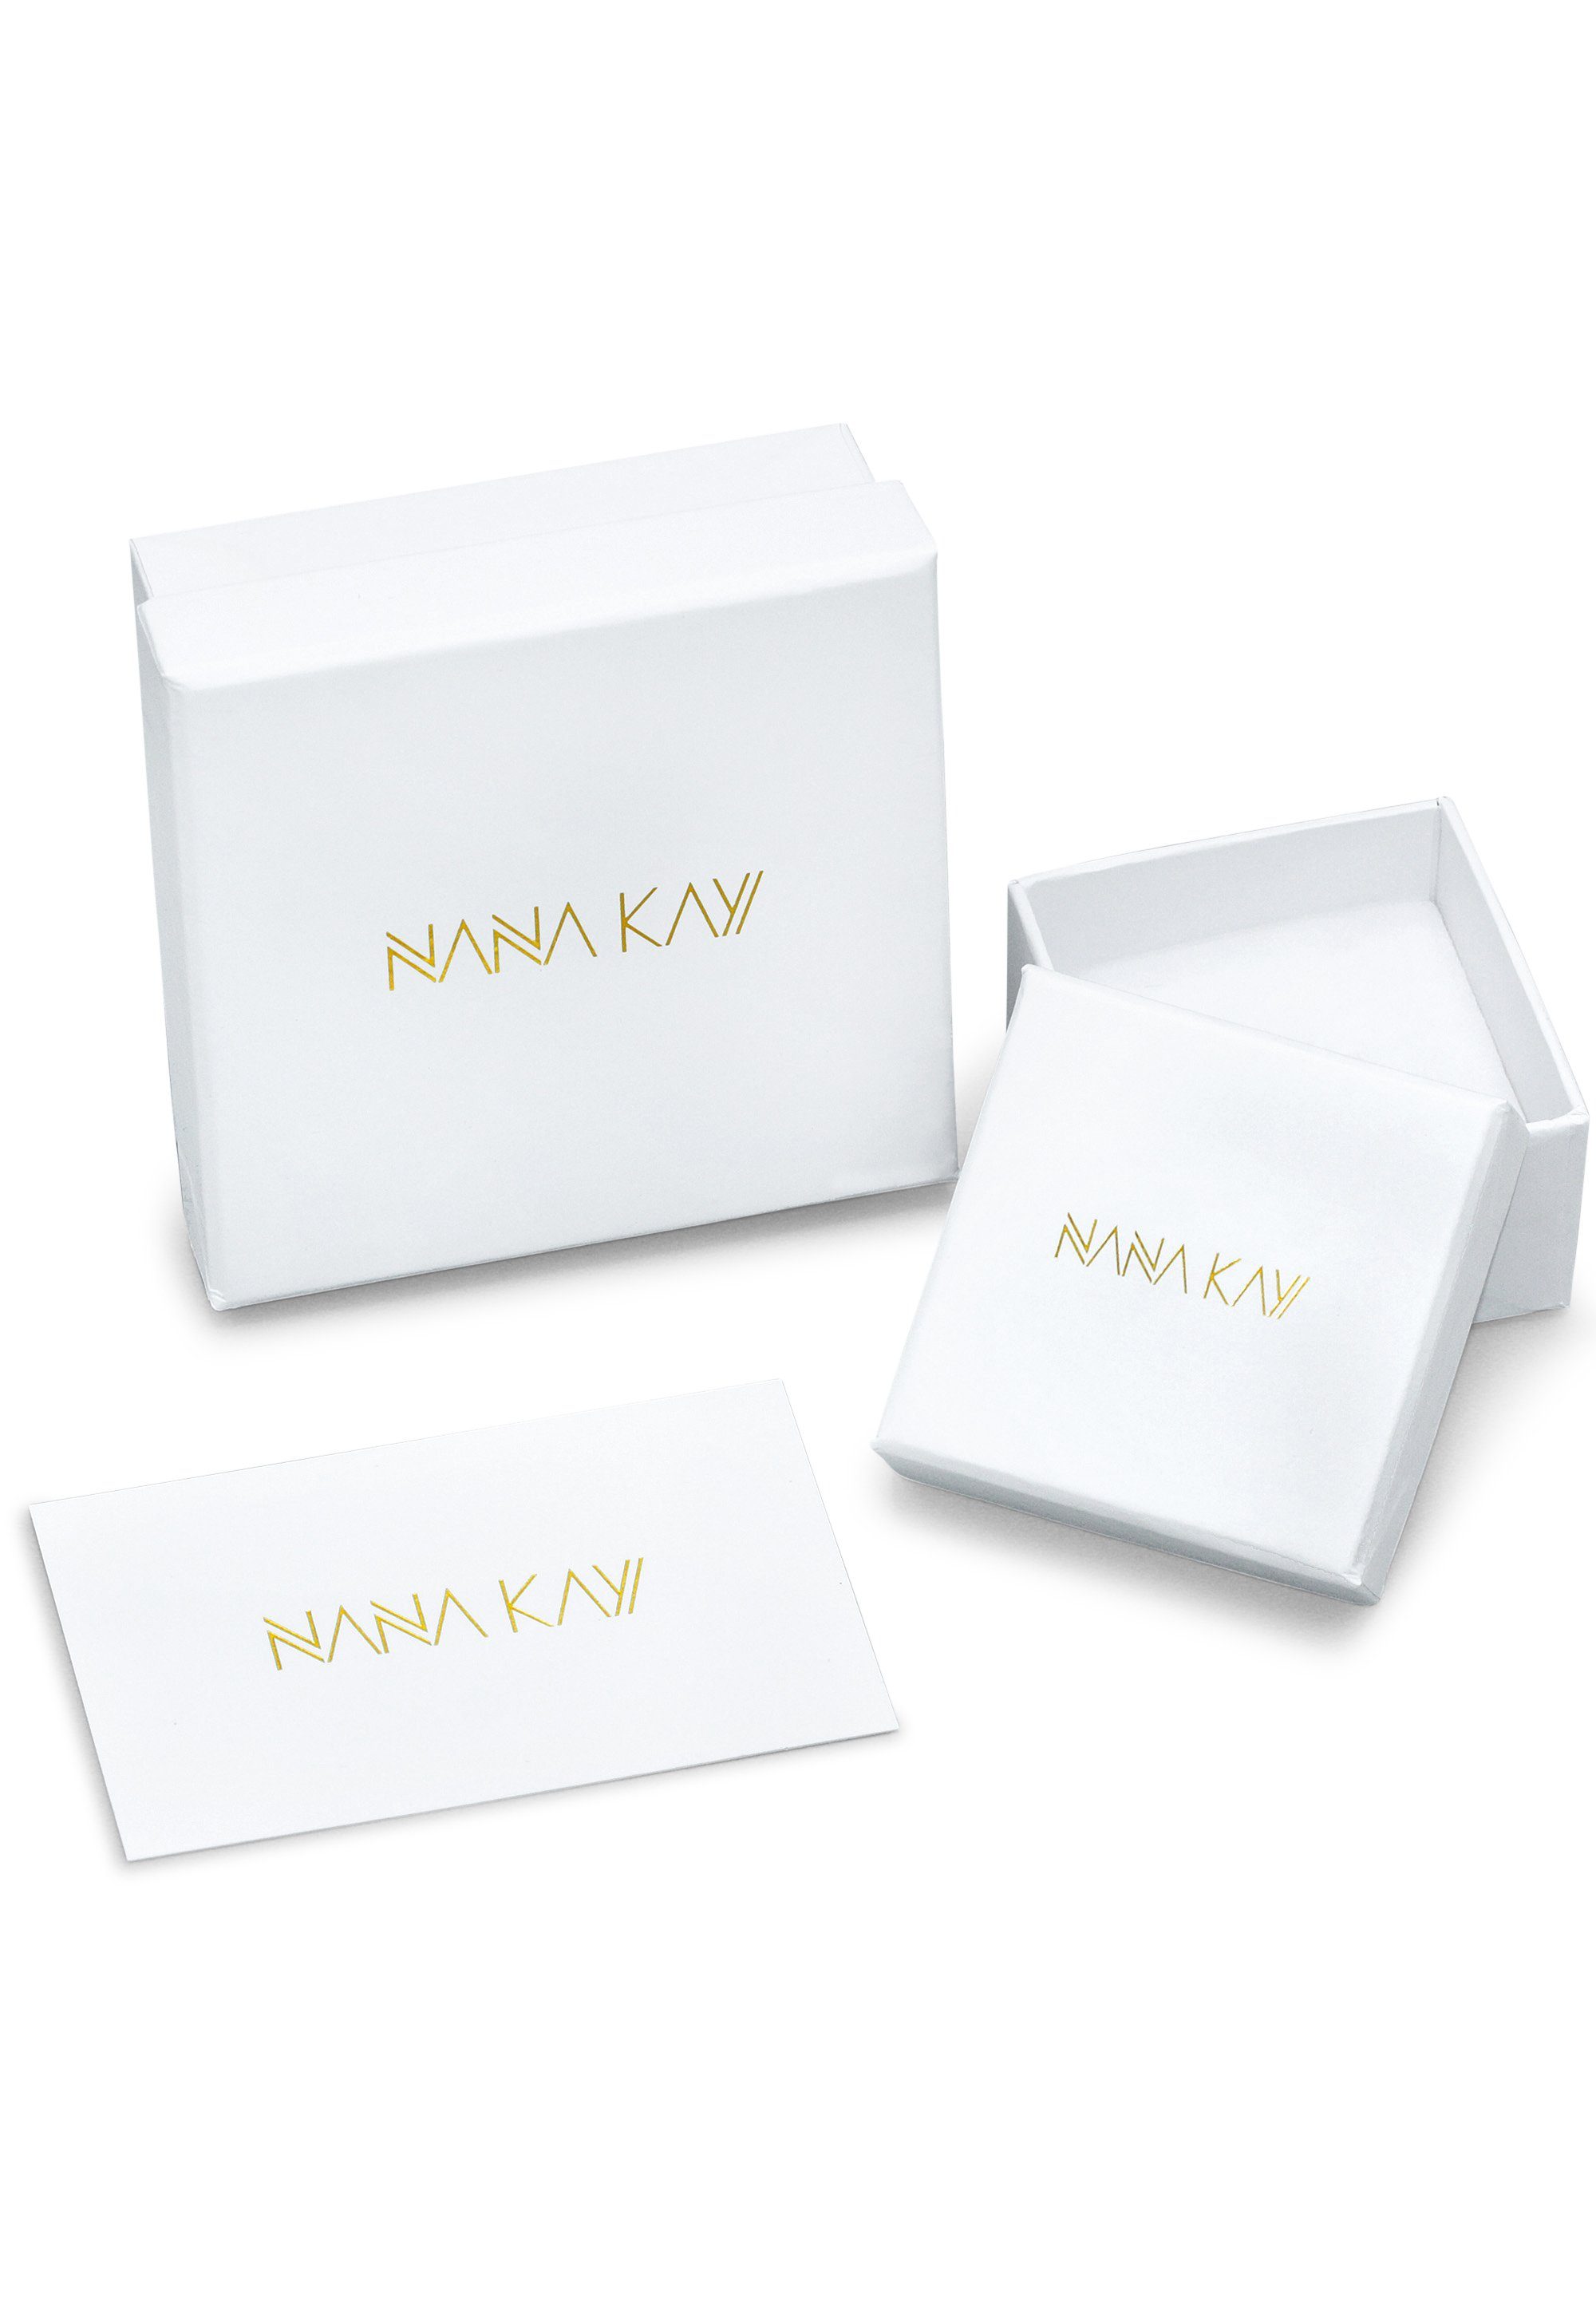 Nana niedlichem Gold KAY Kids, Armband mit NANA Kay Emaille-Element for